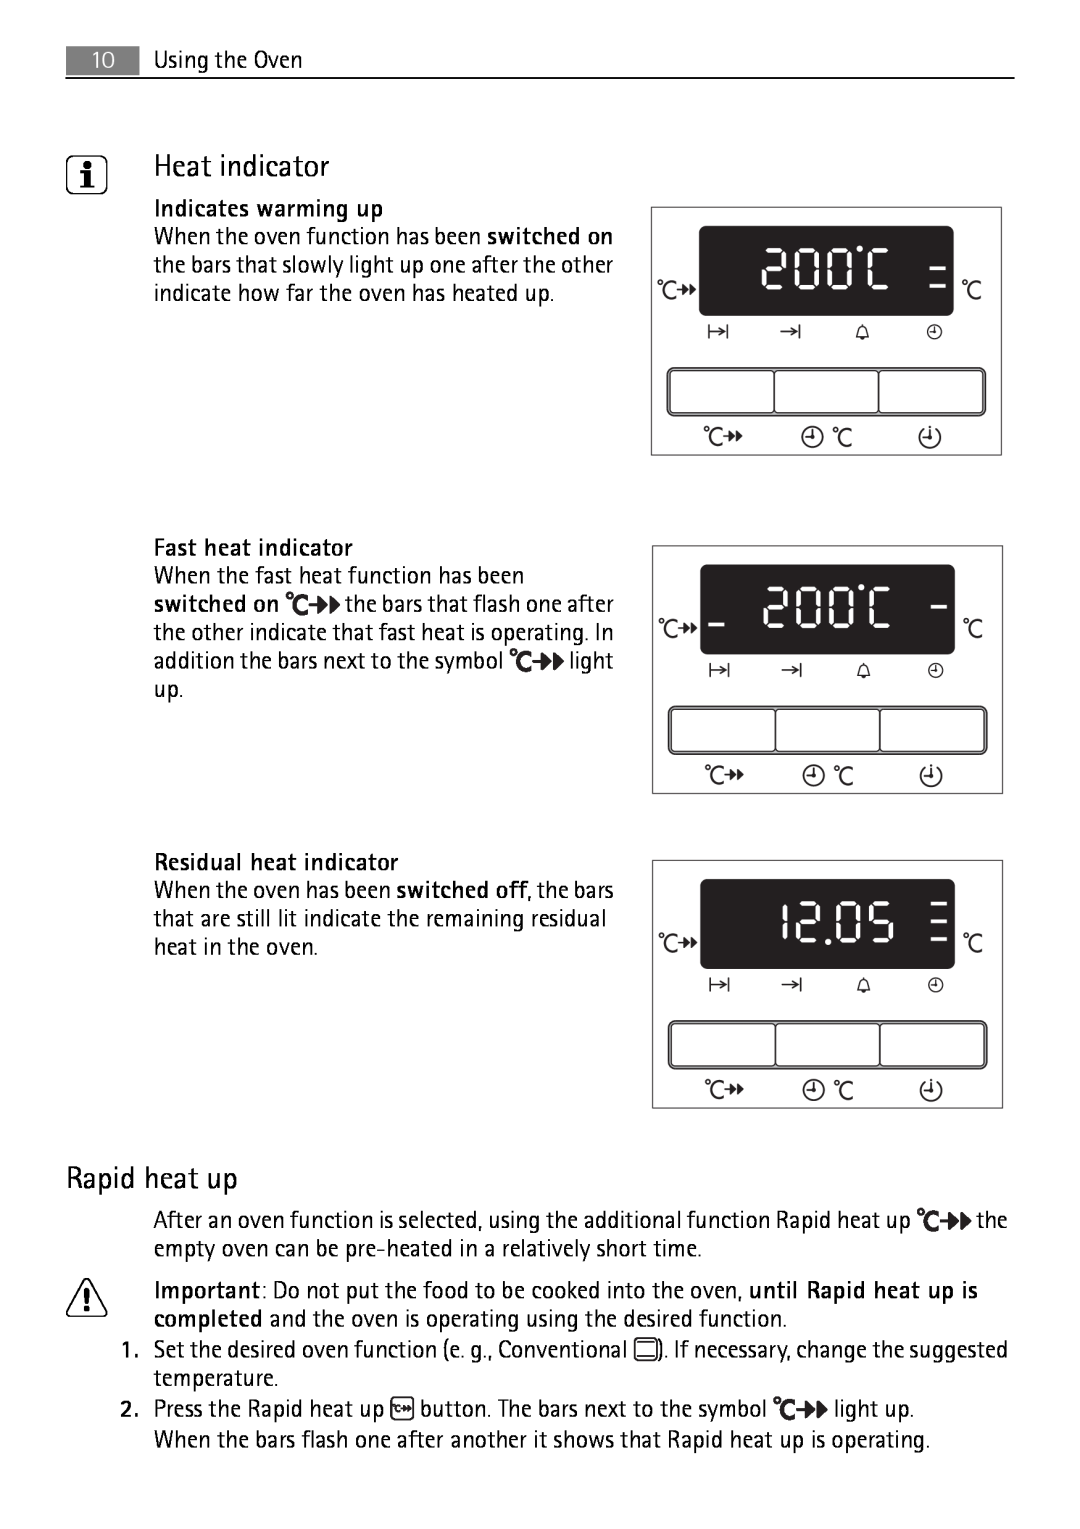 Electrolux B3741-5 Heat indicator, Rapid heat up, Indicates warming up, Fast heat indicator, Residual heat indicator 